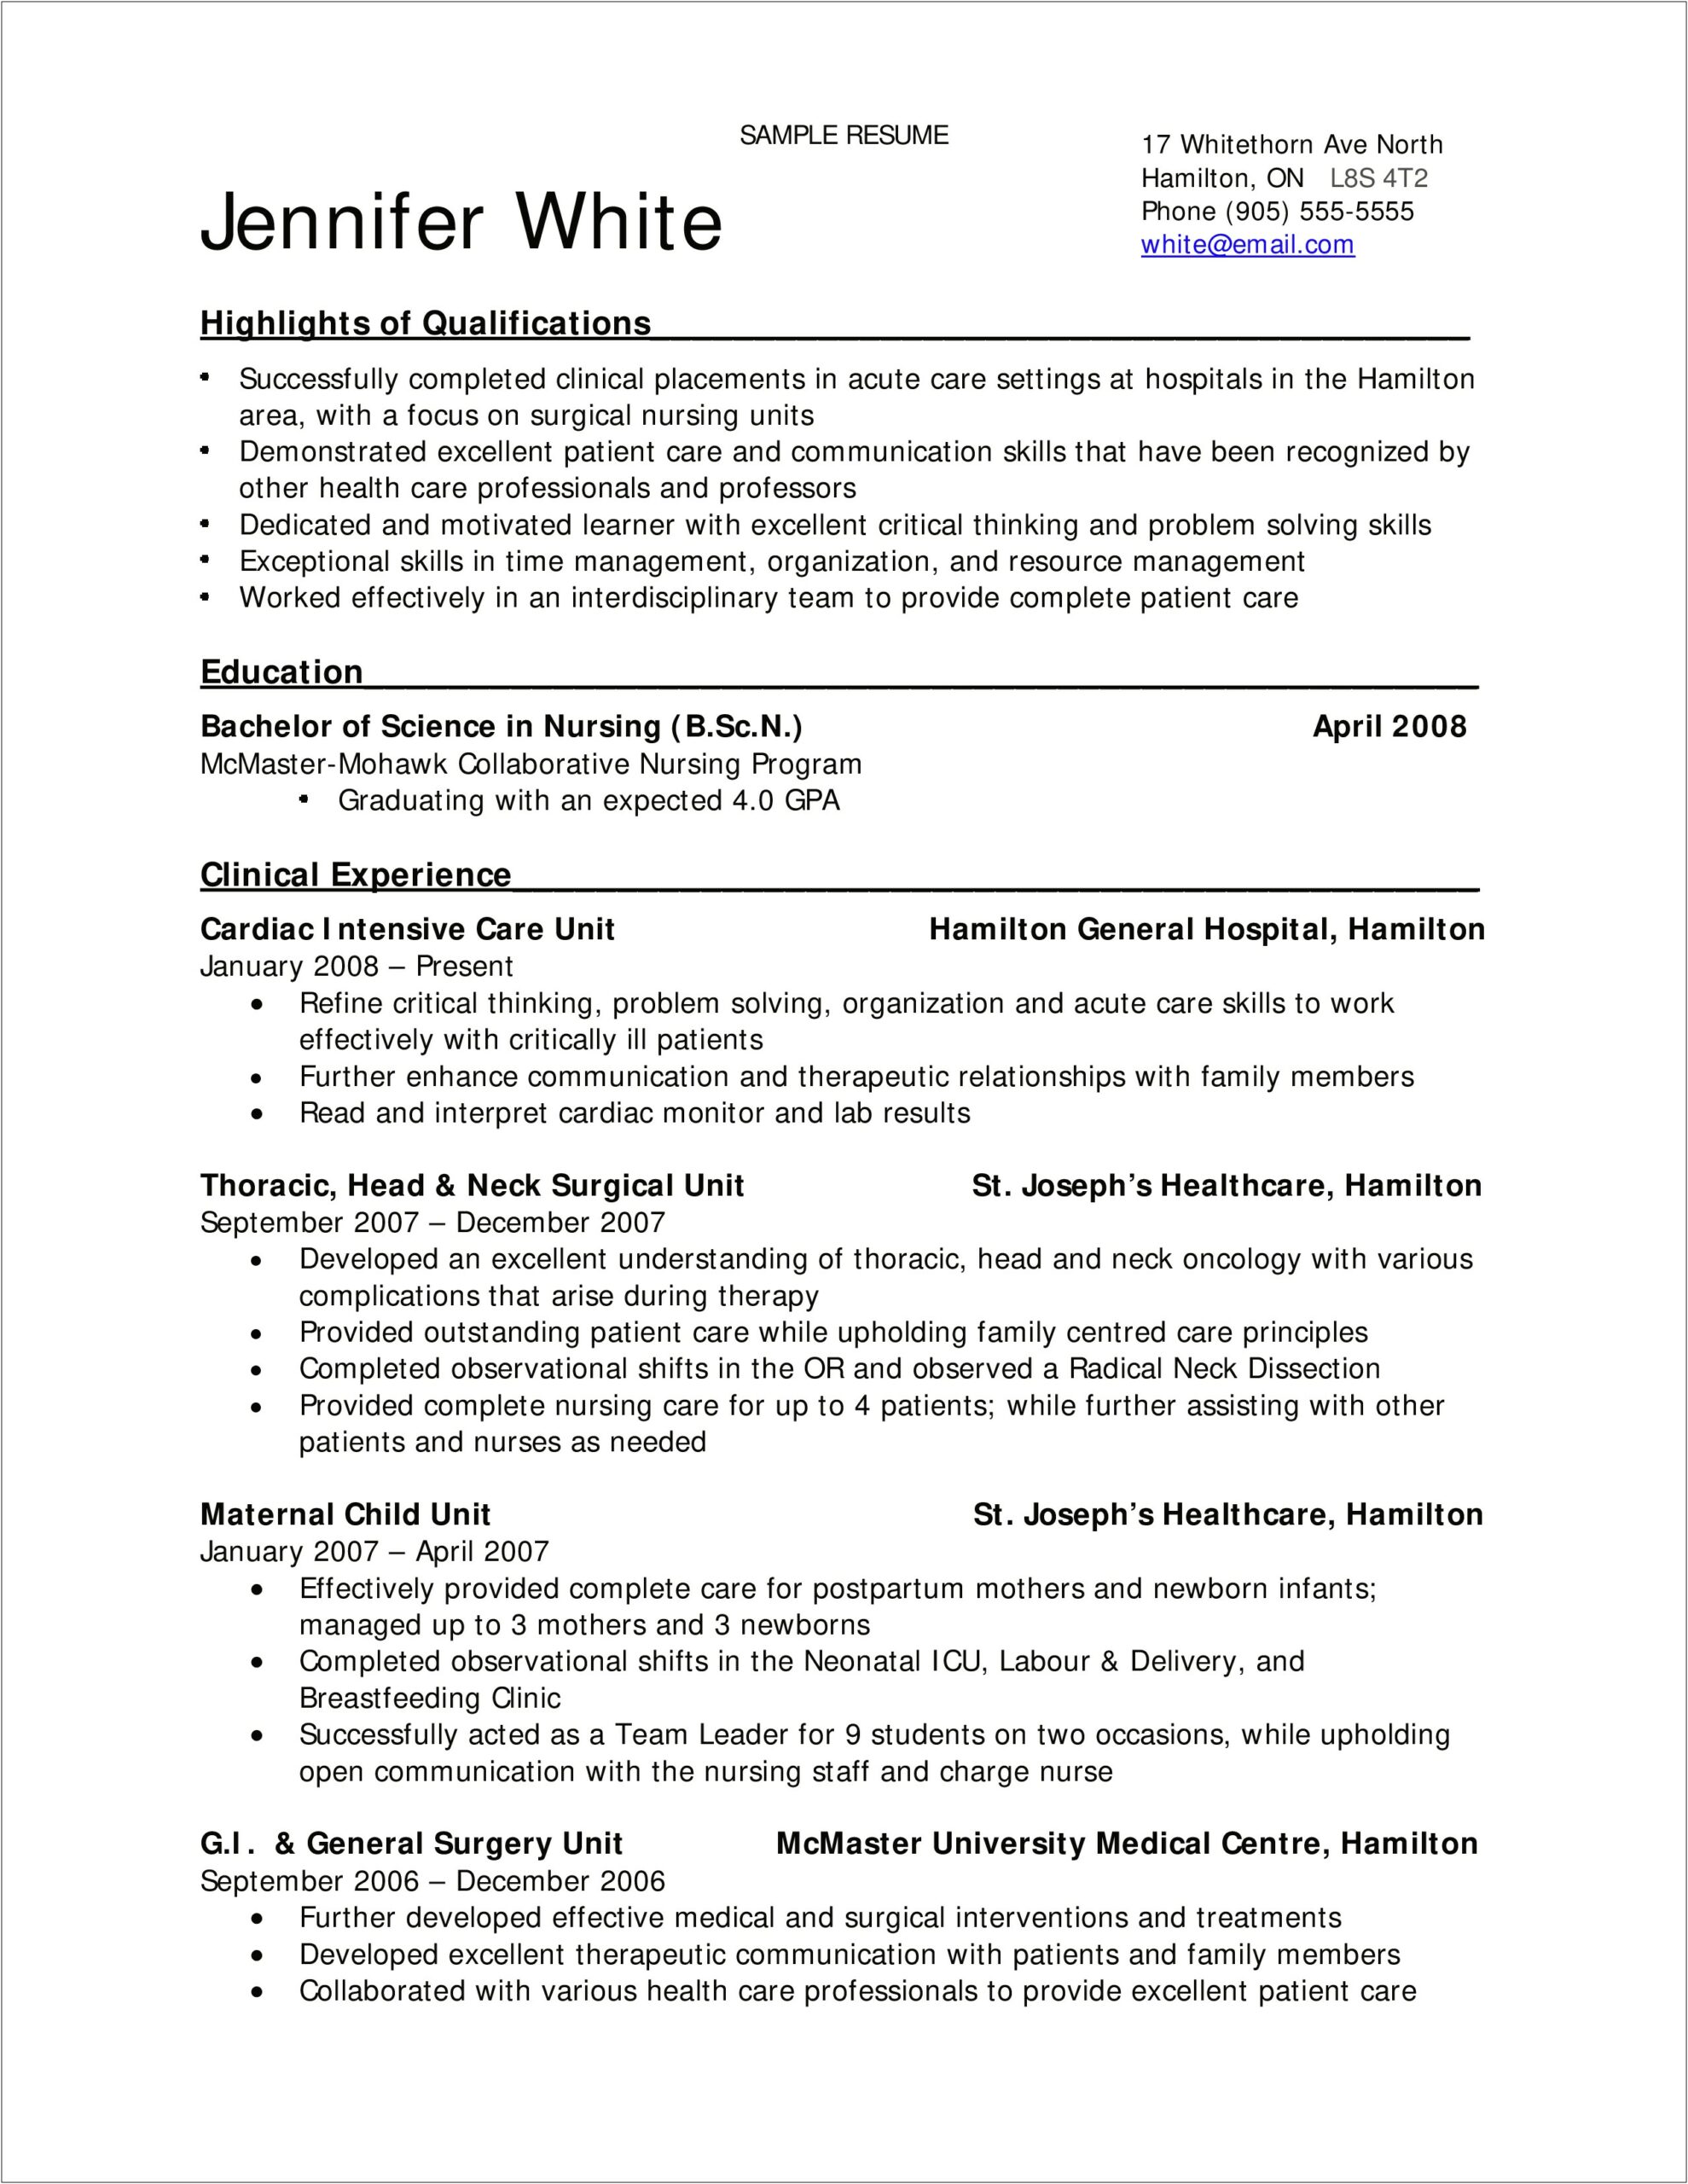 Sample Resume Including Skills Section